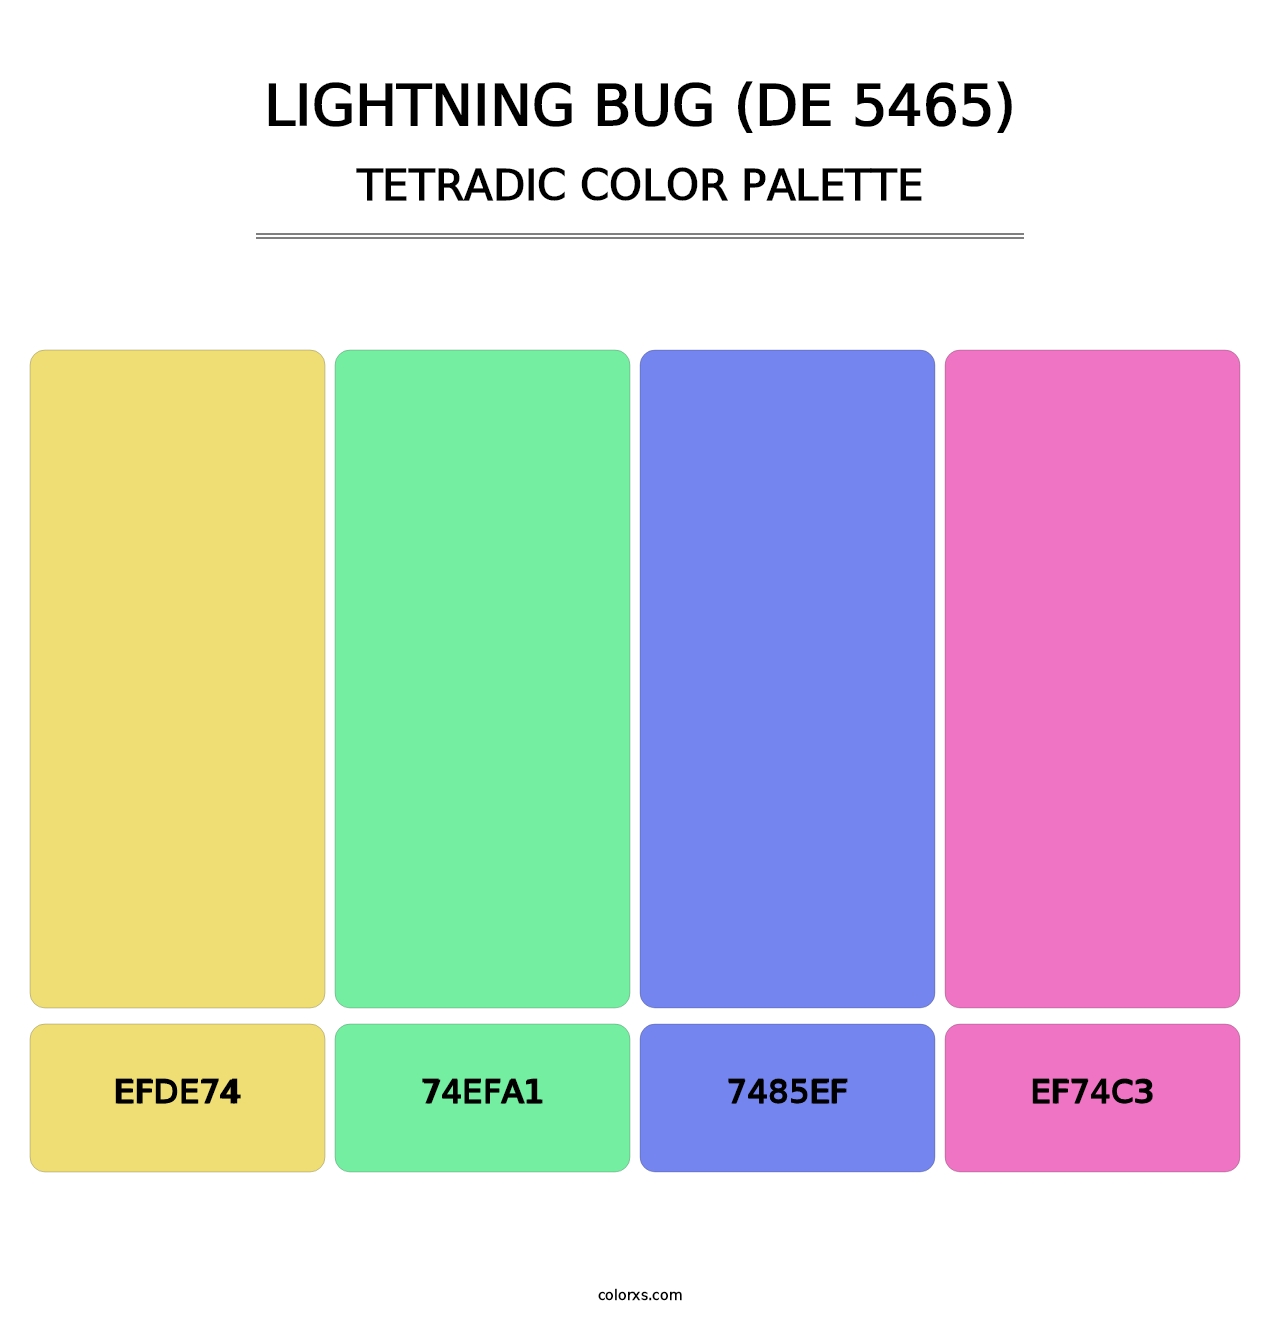 Lightning Bug (DE 5465) - Tetradic Color Palette